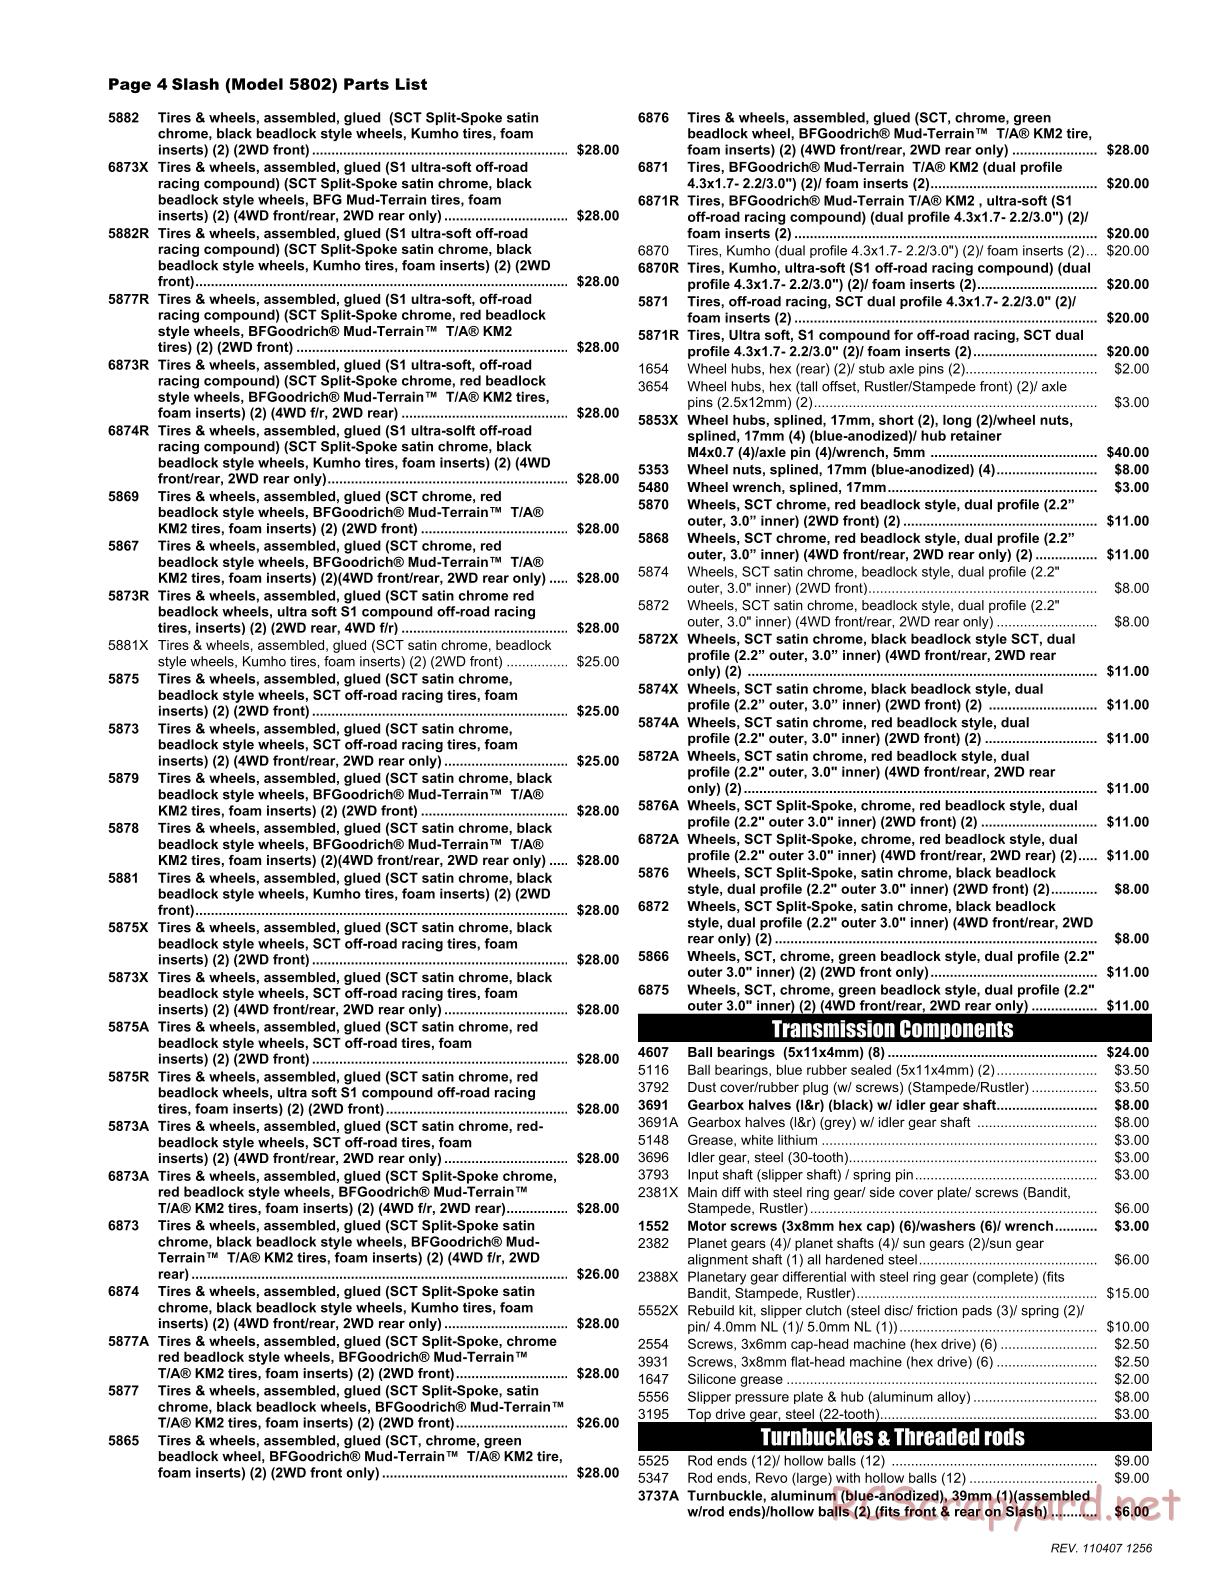 Traxxas - Slash 2WD (2011) - Parts List - Page 4